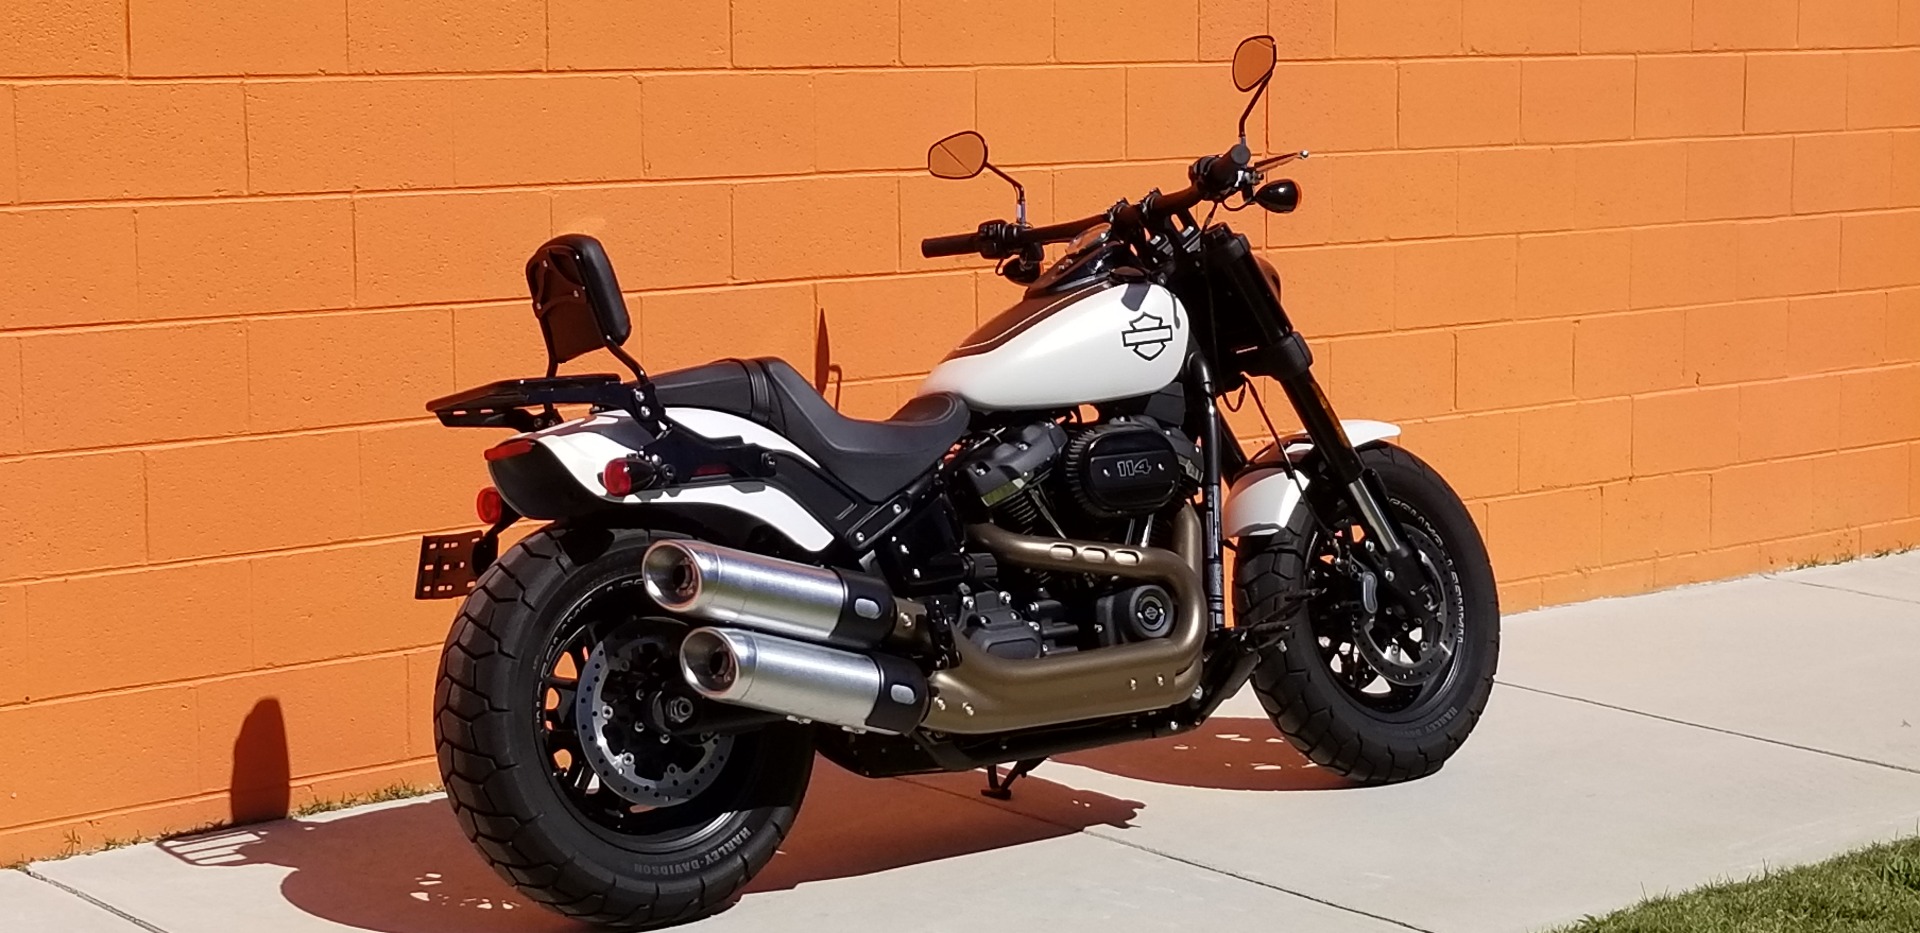 2018 Harley-Davidson Fat Bob® 114 in Fredericksburg, Virginia - Photo 4